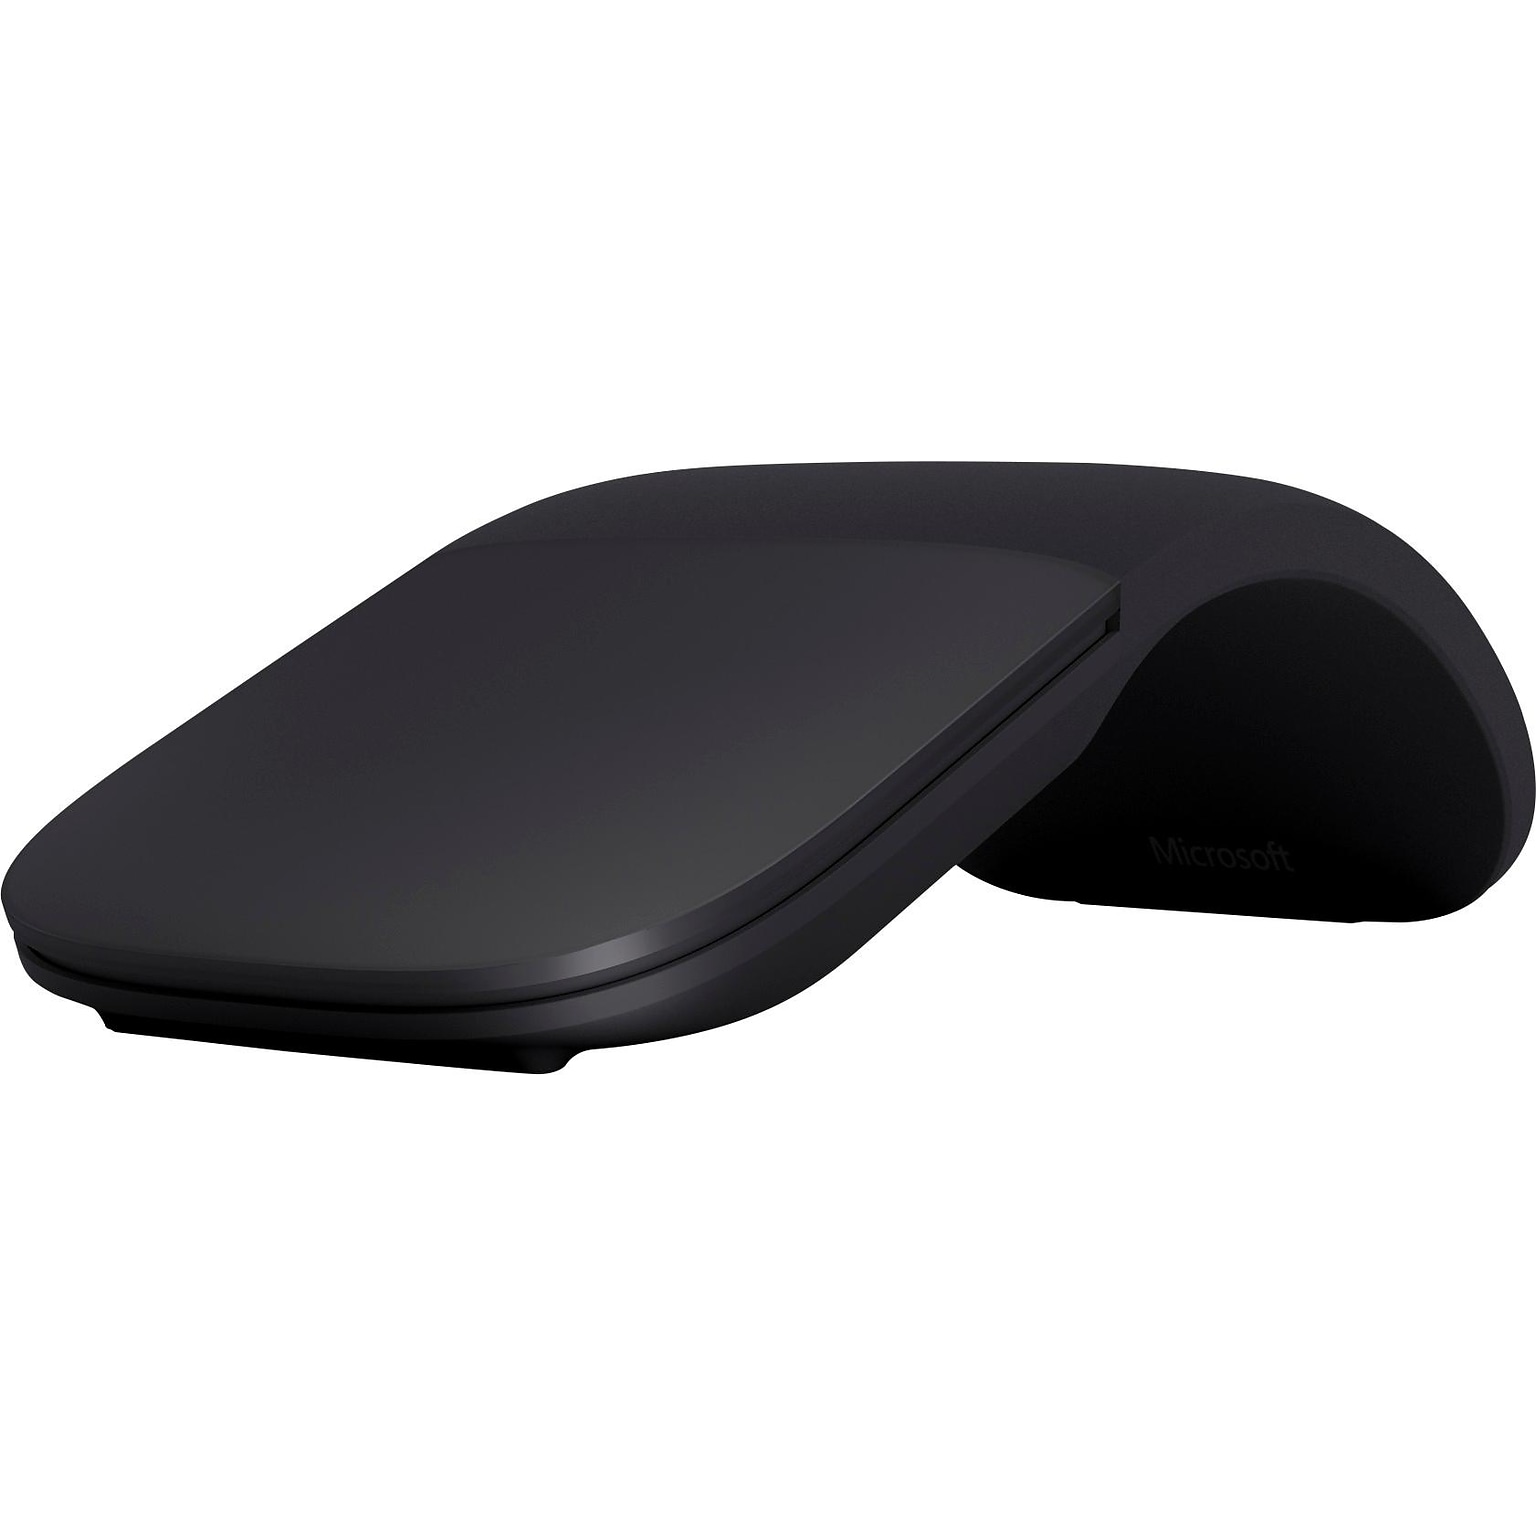 Microsoft Arc FHD-00016 Wireless Bluetrack Mouse, Black